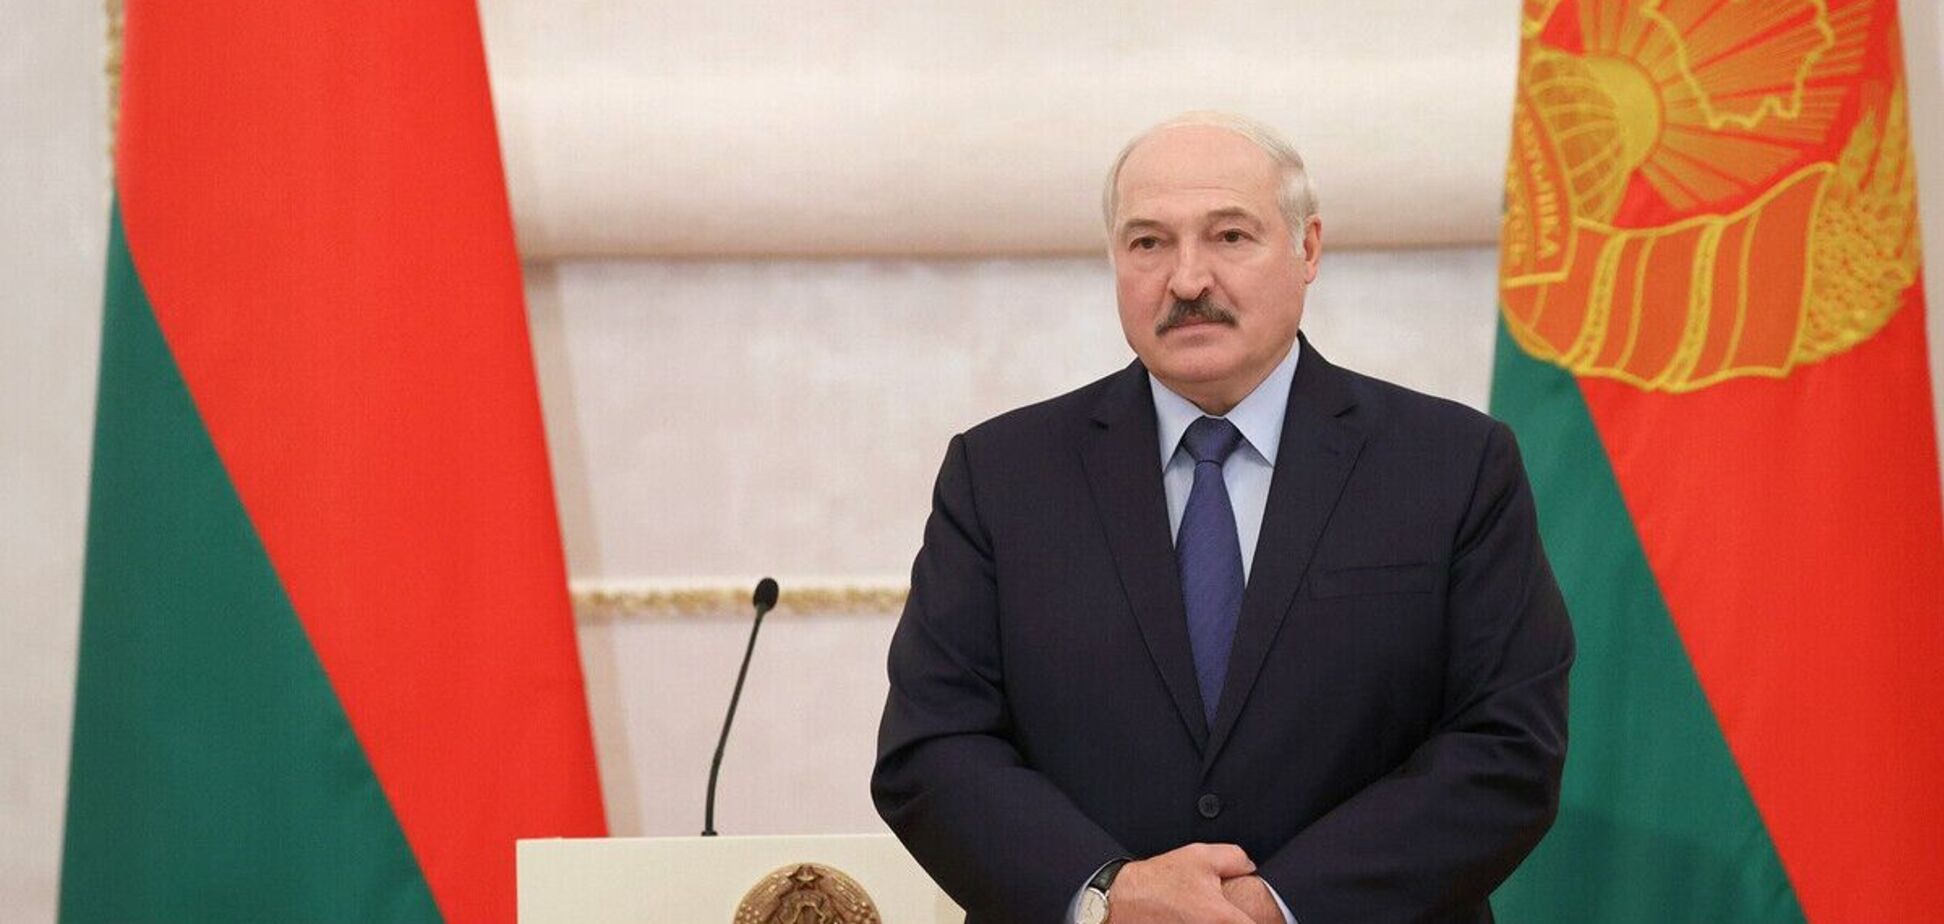 Лукашенко вперше відреагував на скандал із прапором Білорусі на ЧС з хокею